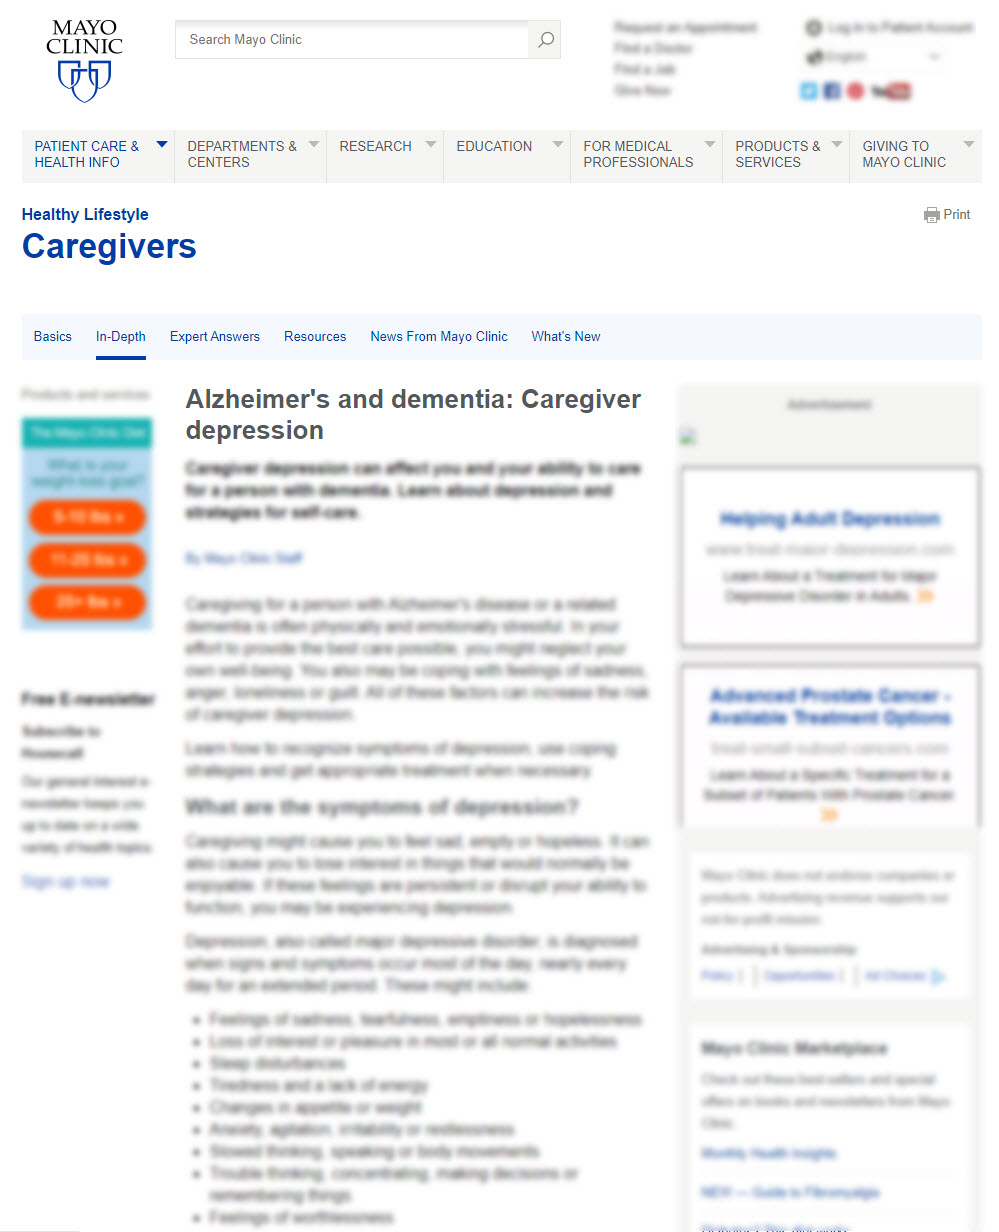 Alzheimer's and Dementia: Caregiver Depression